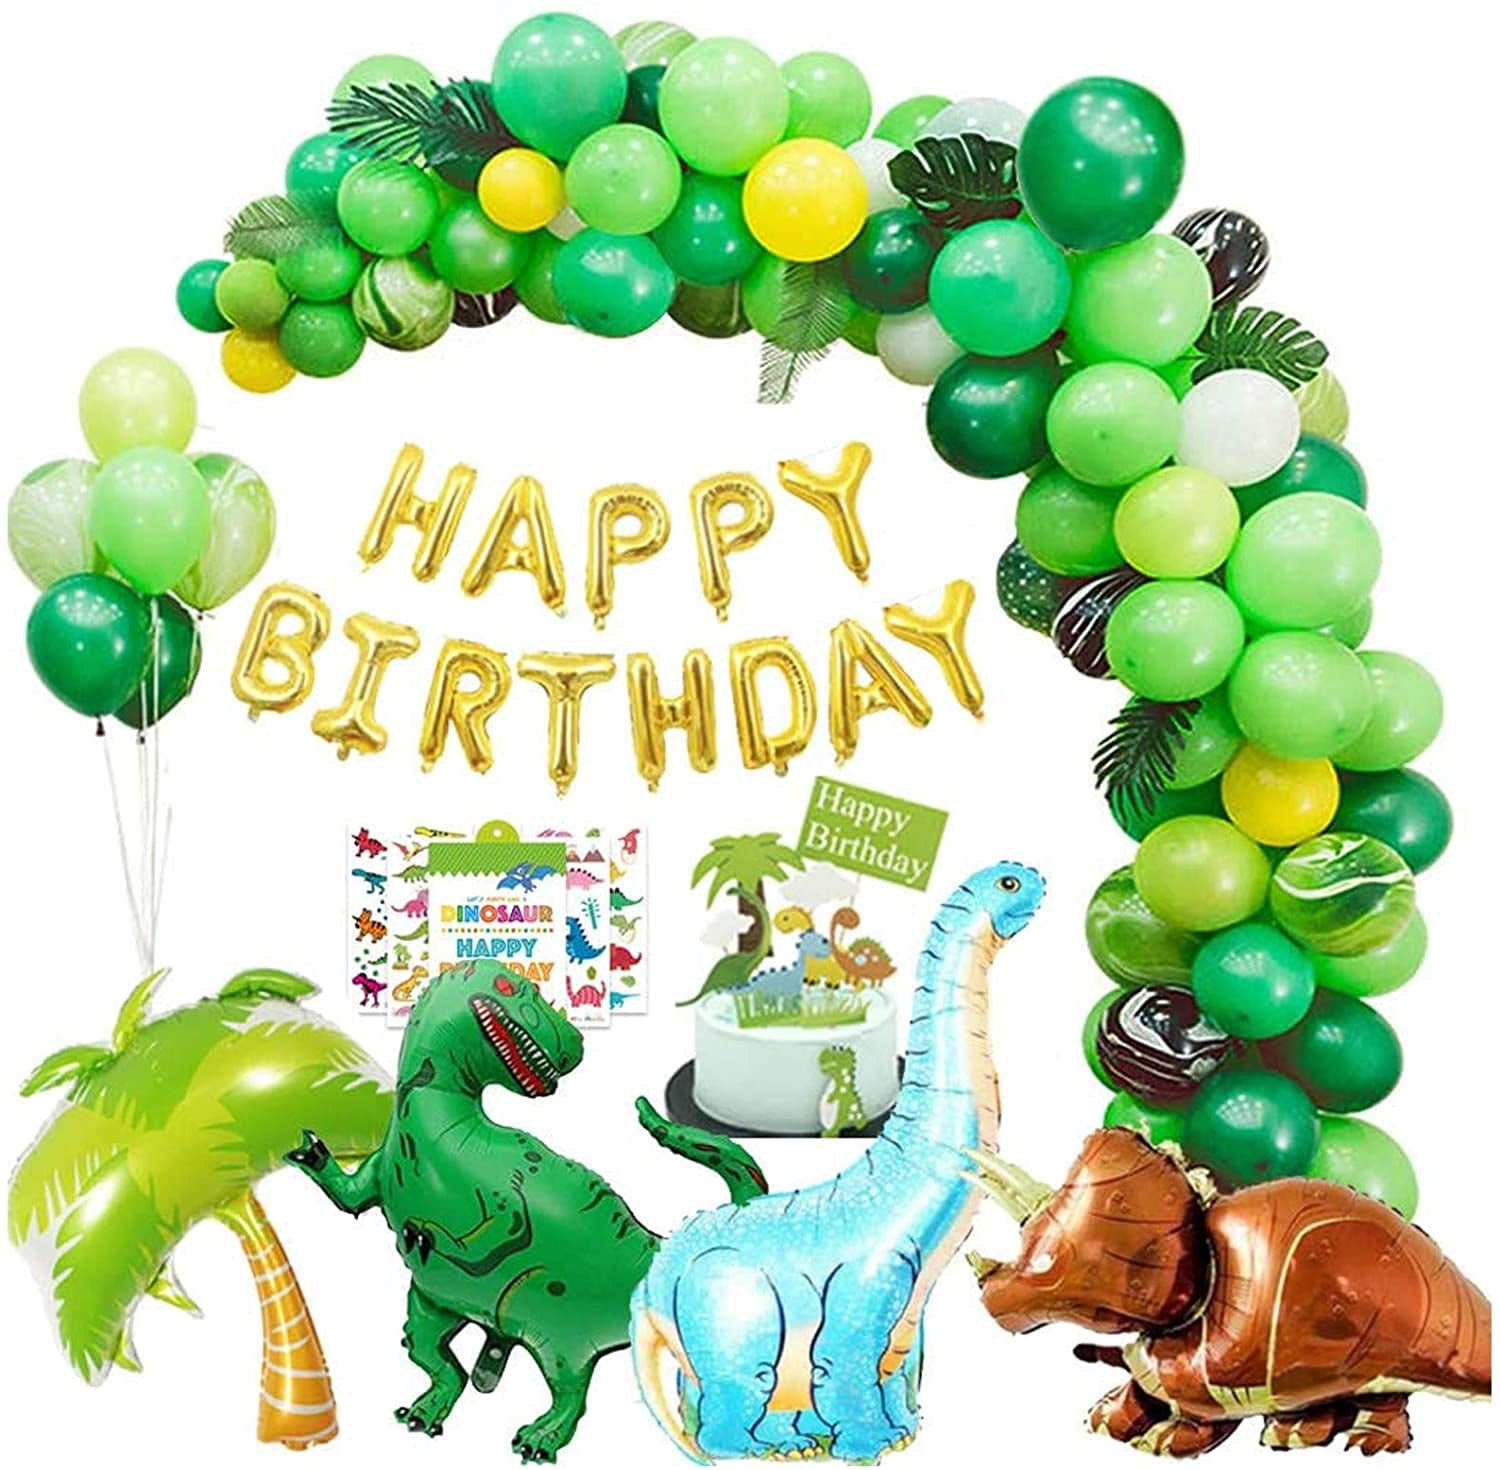  meowtastic Rainbow Birthday Decorations - Colorful Happy  Birthday Banner with Honeycomb Ball, Dinosaur Hanging Swirl Streamer,  Circle Dot Garland Decoration - Birthday Party Decorations for Boys Kids :  Toys & Games